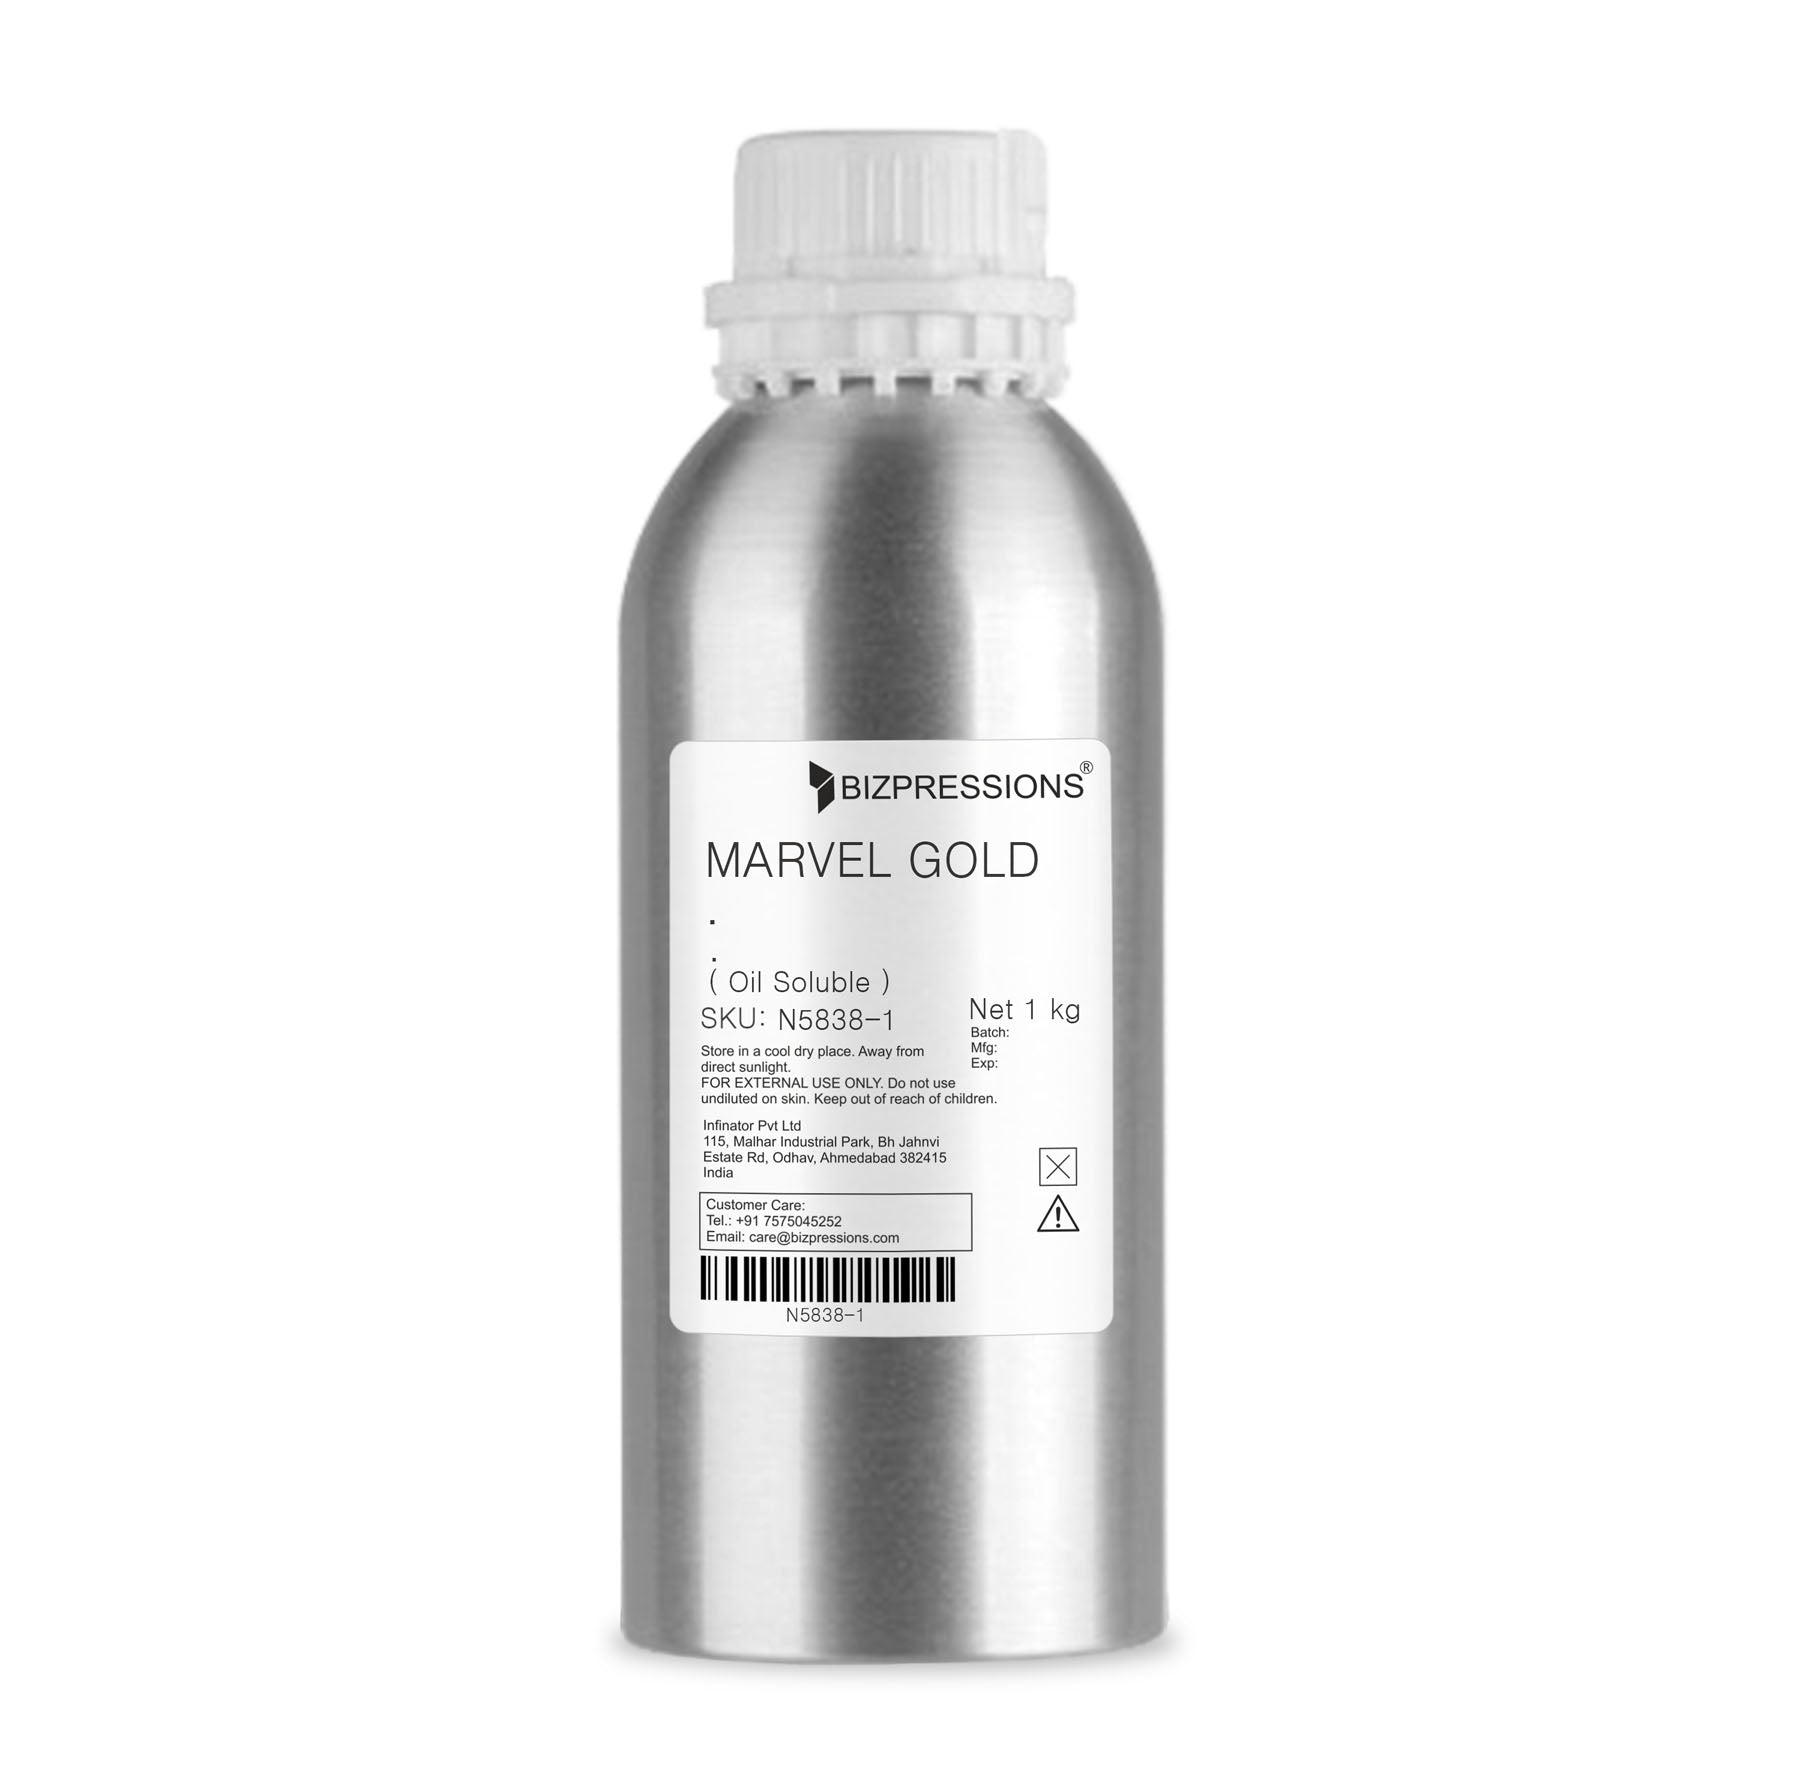 MARVEL GOLD - Fragrance ( Oil Soluble ) - 1 kg